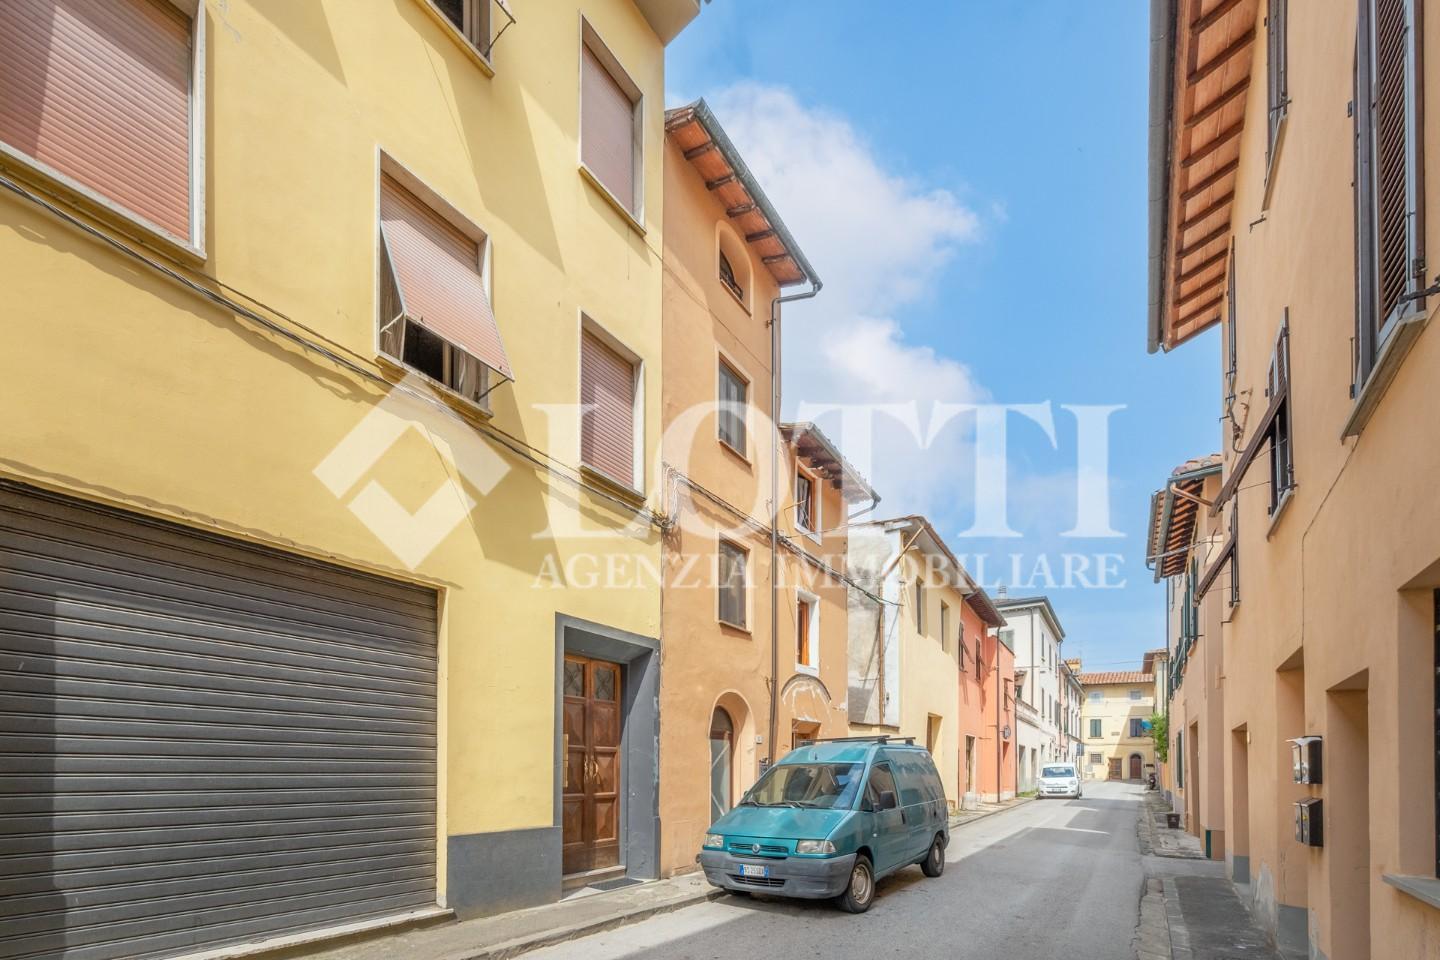 Townhouses for sale in Castelfranco di Sotto (PI)